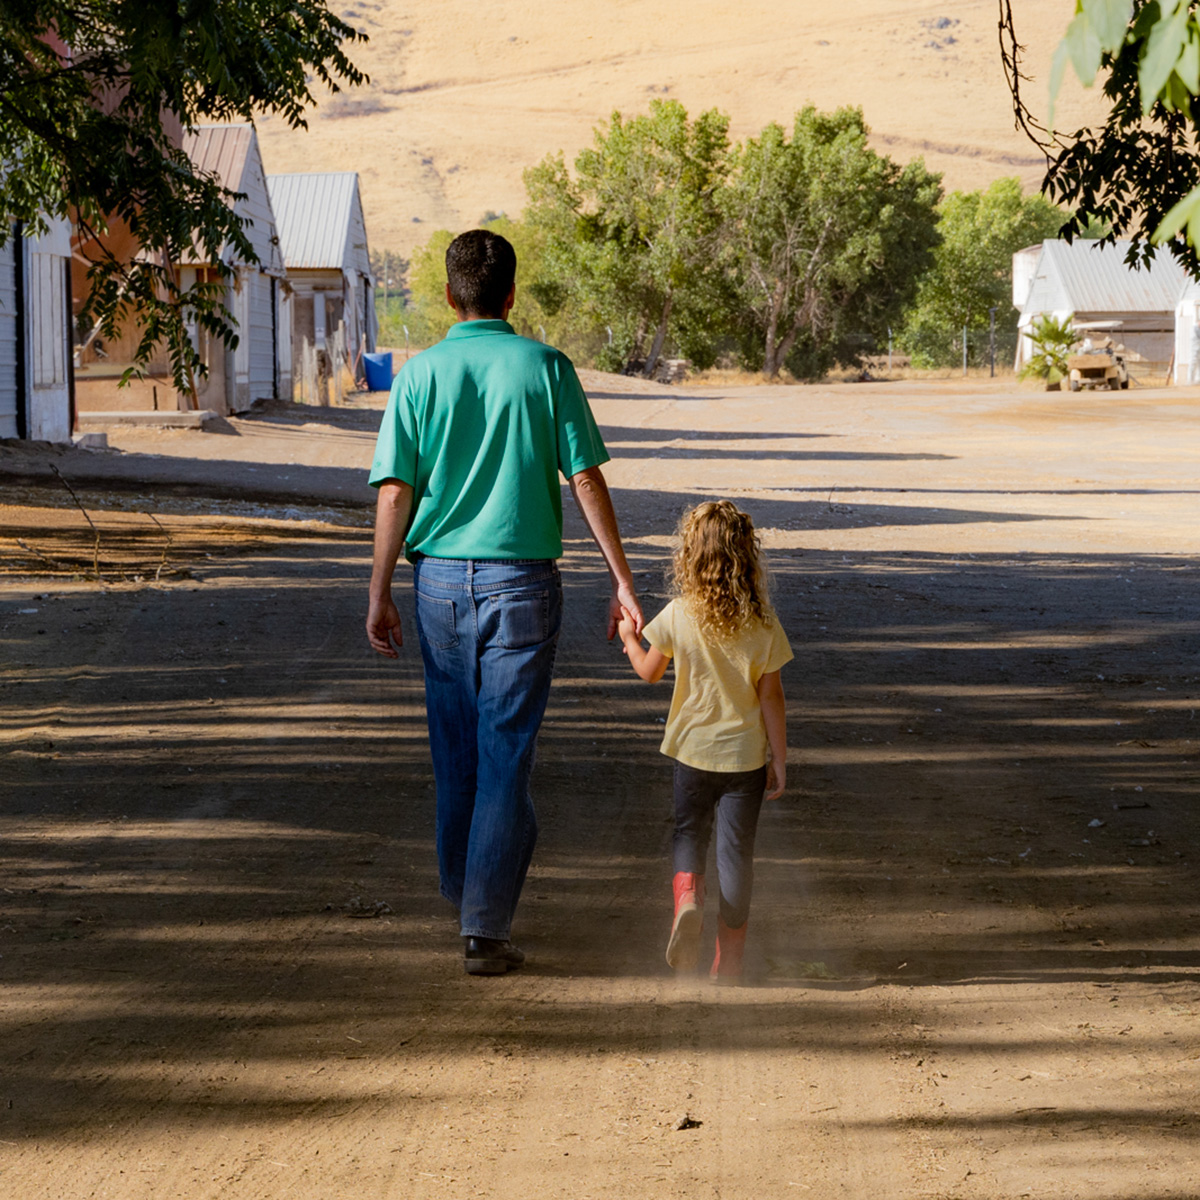 David Pitman walking with little girl